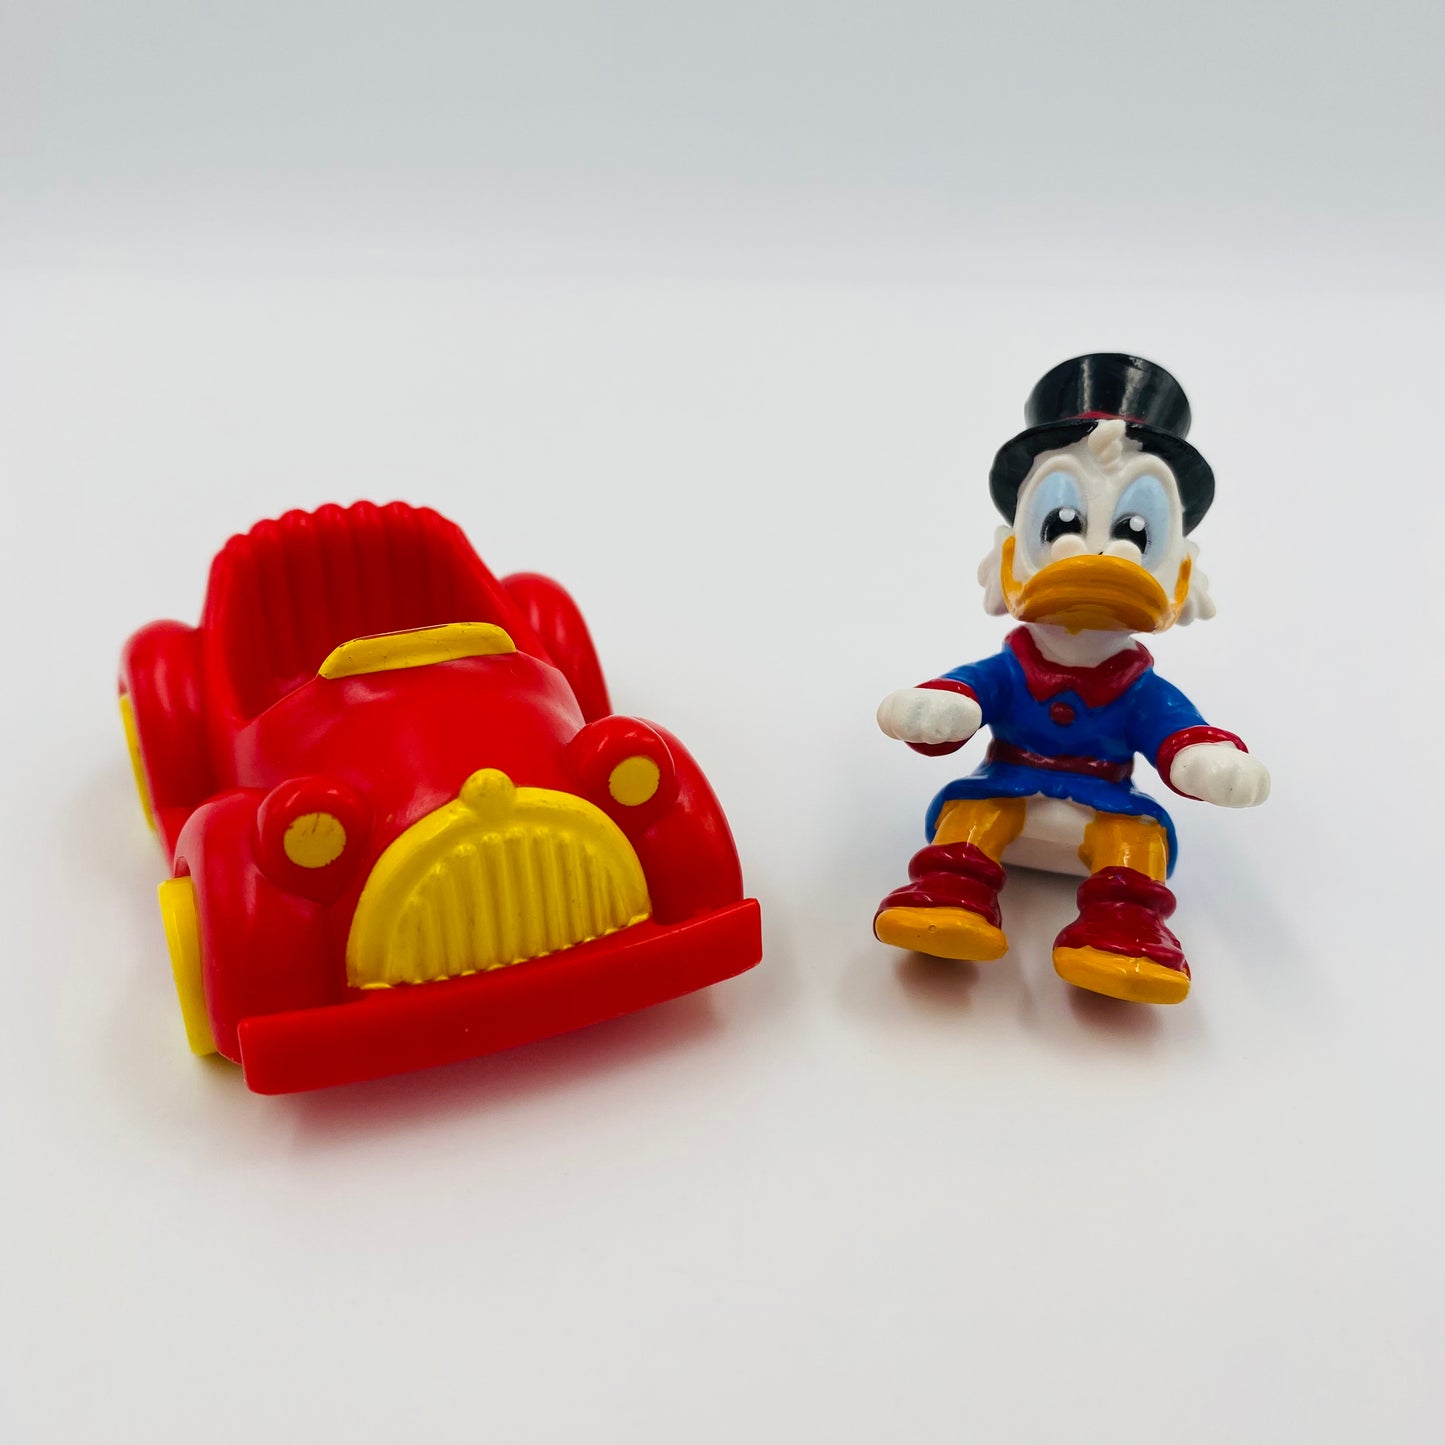 DuckTales Uncle Scrooge McDuck in Car McDonald's Happy Meal toy (1988) loose